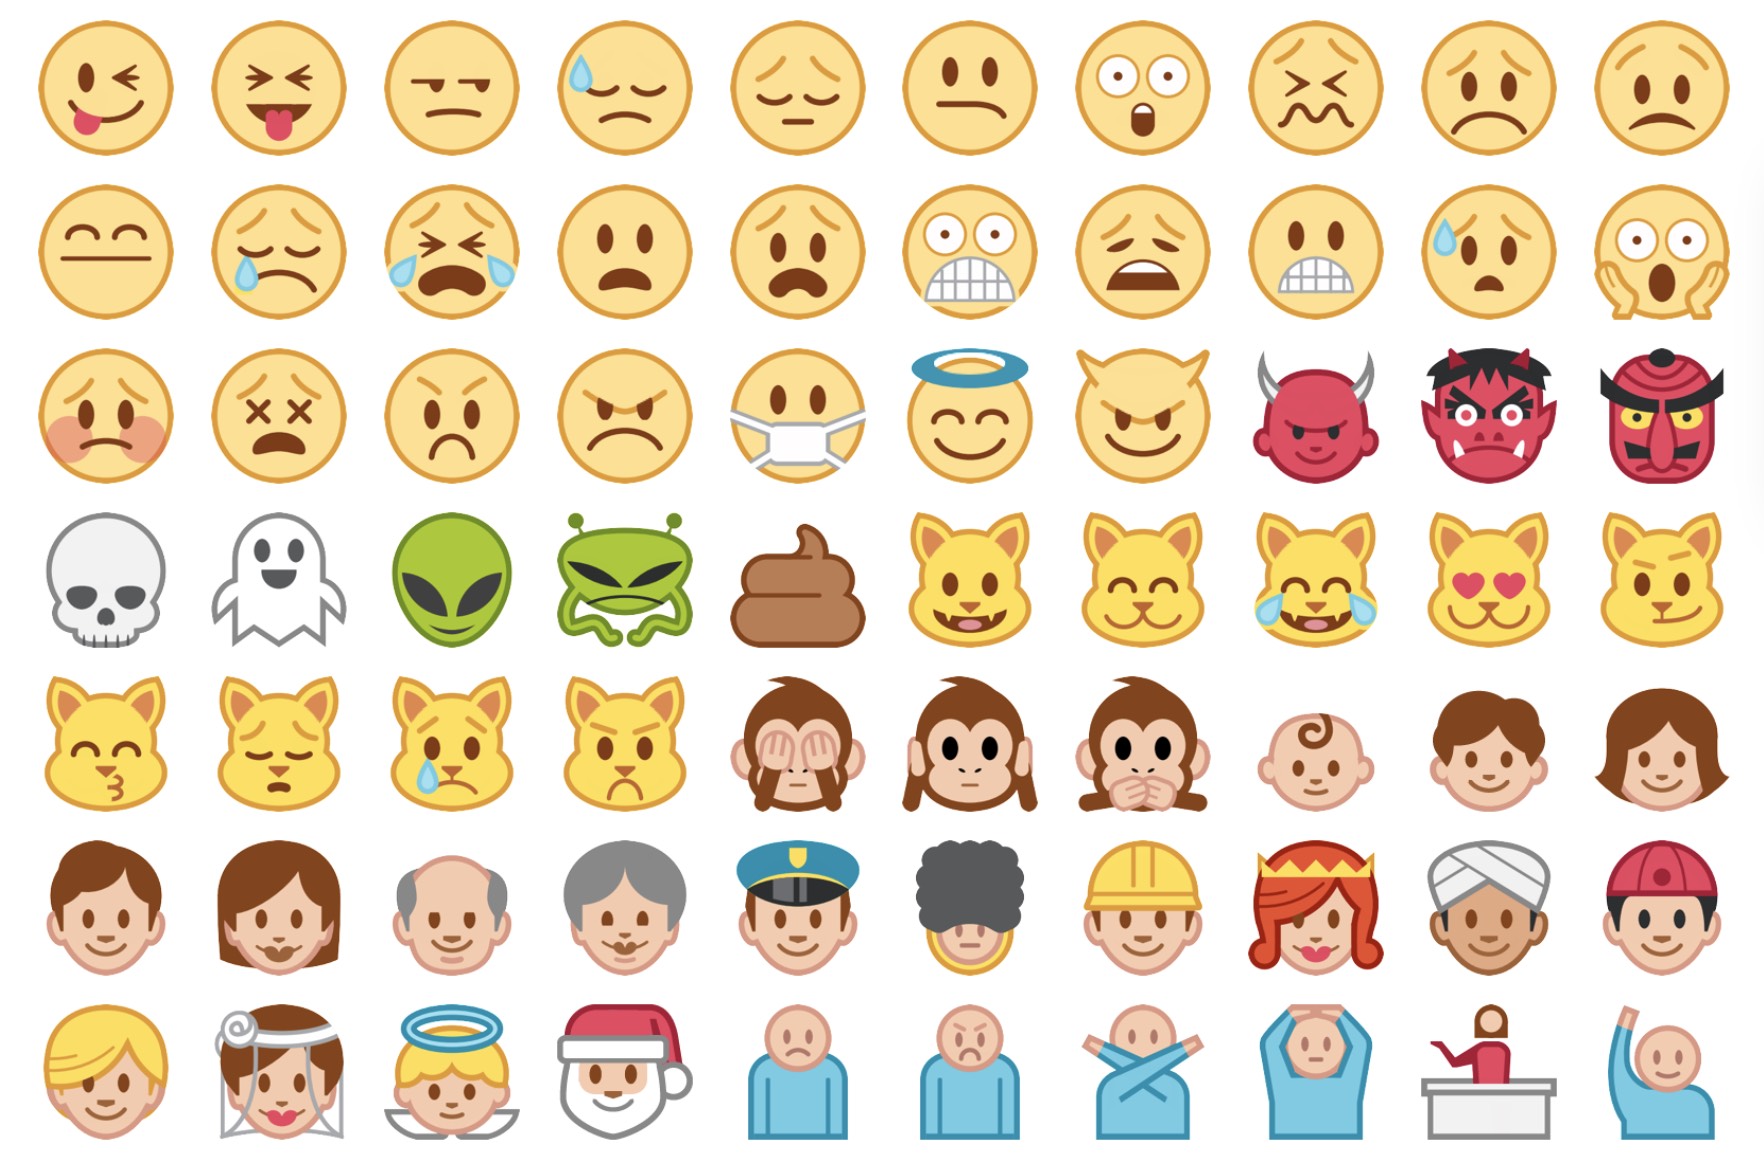 htc-emoji-2015-emojipedia.jpg